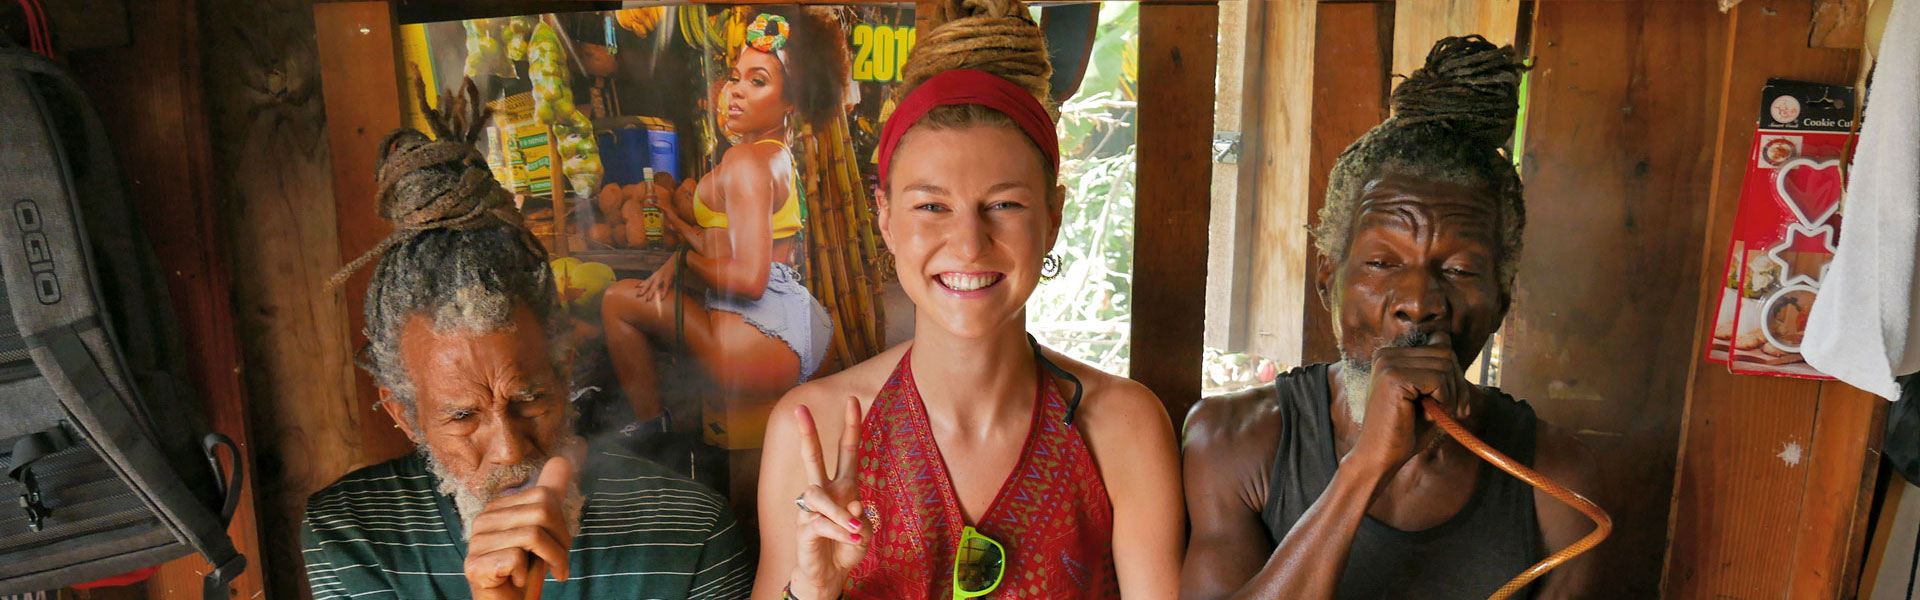 German dreadlock girl with Rastafarians smoking cannabis in Kingston, Jamaica